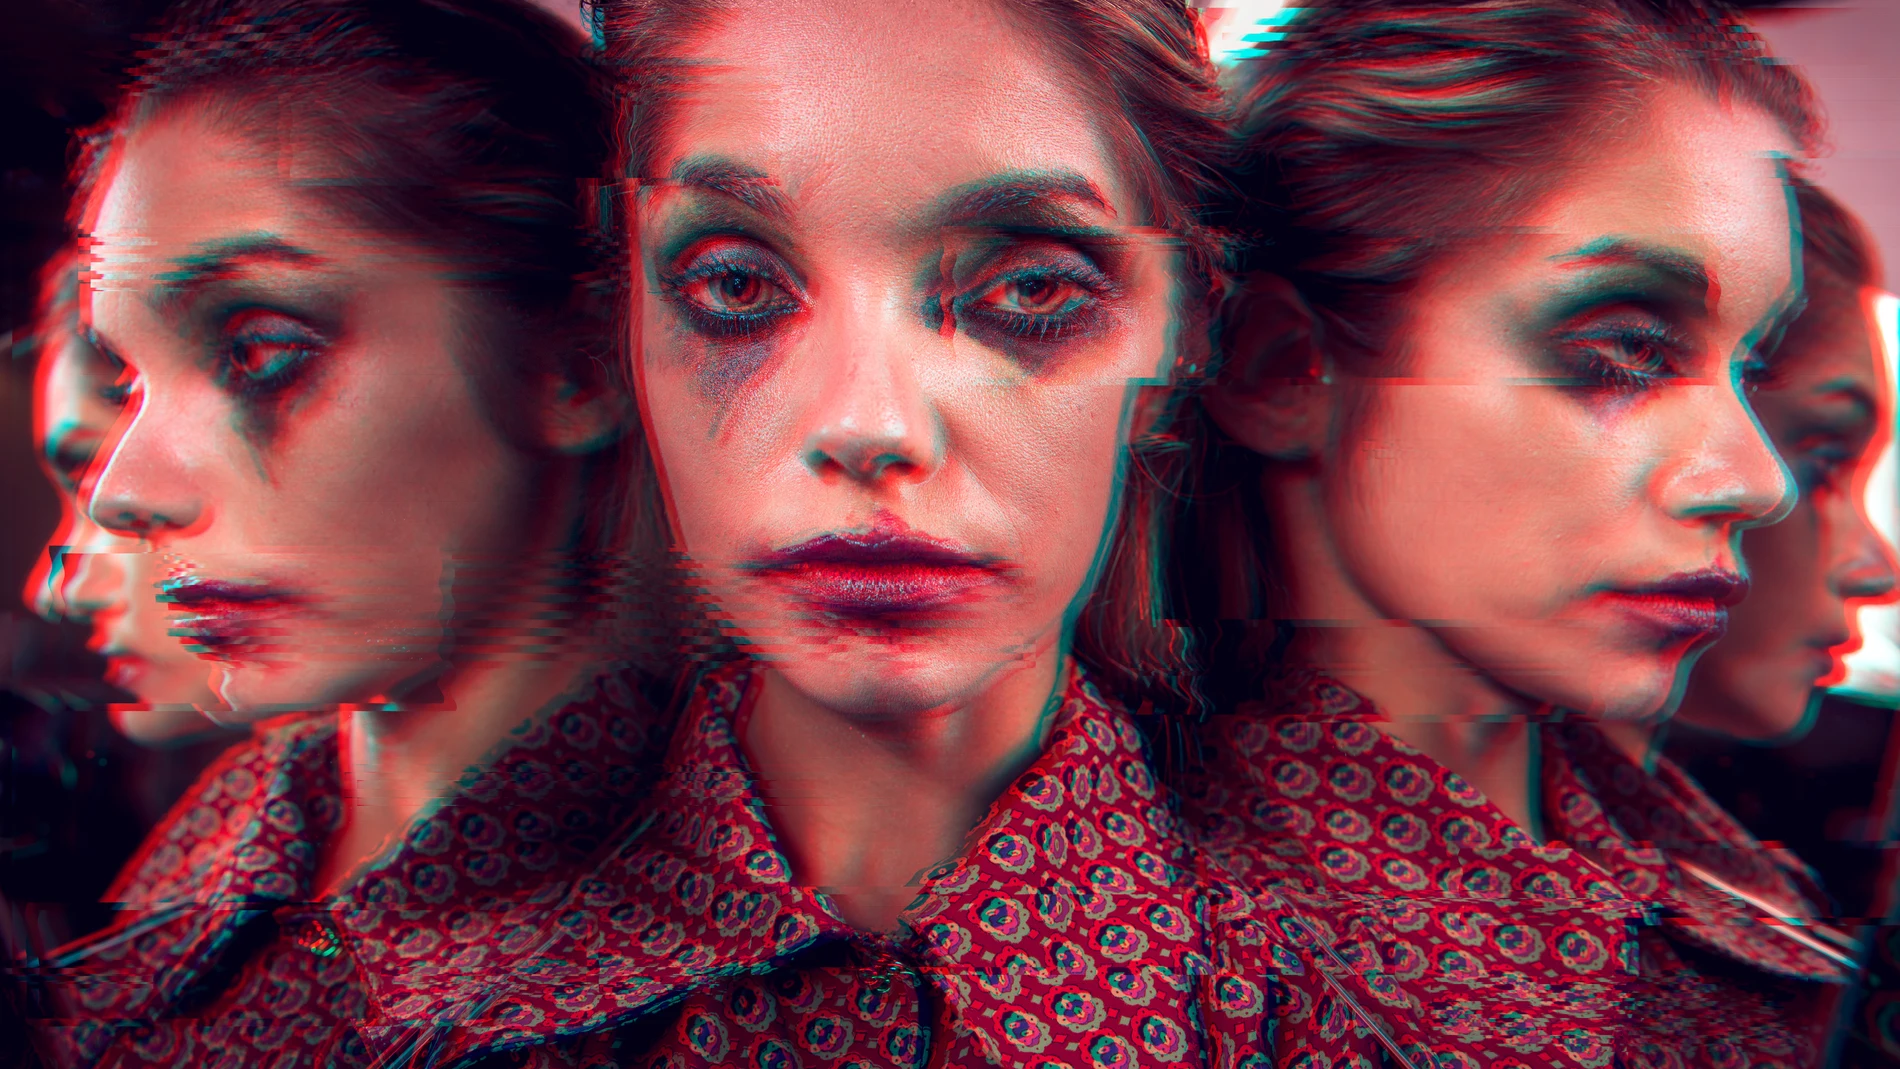 Mujer alucinación depresión droga LSD